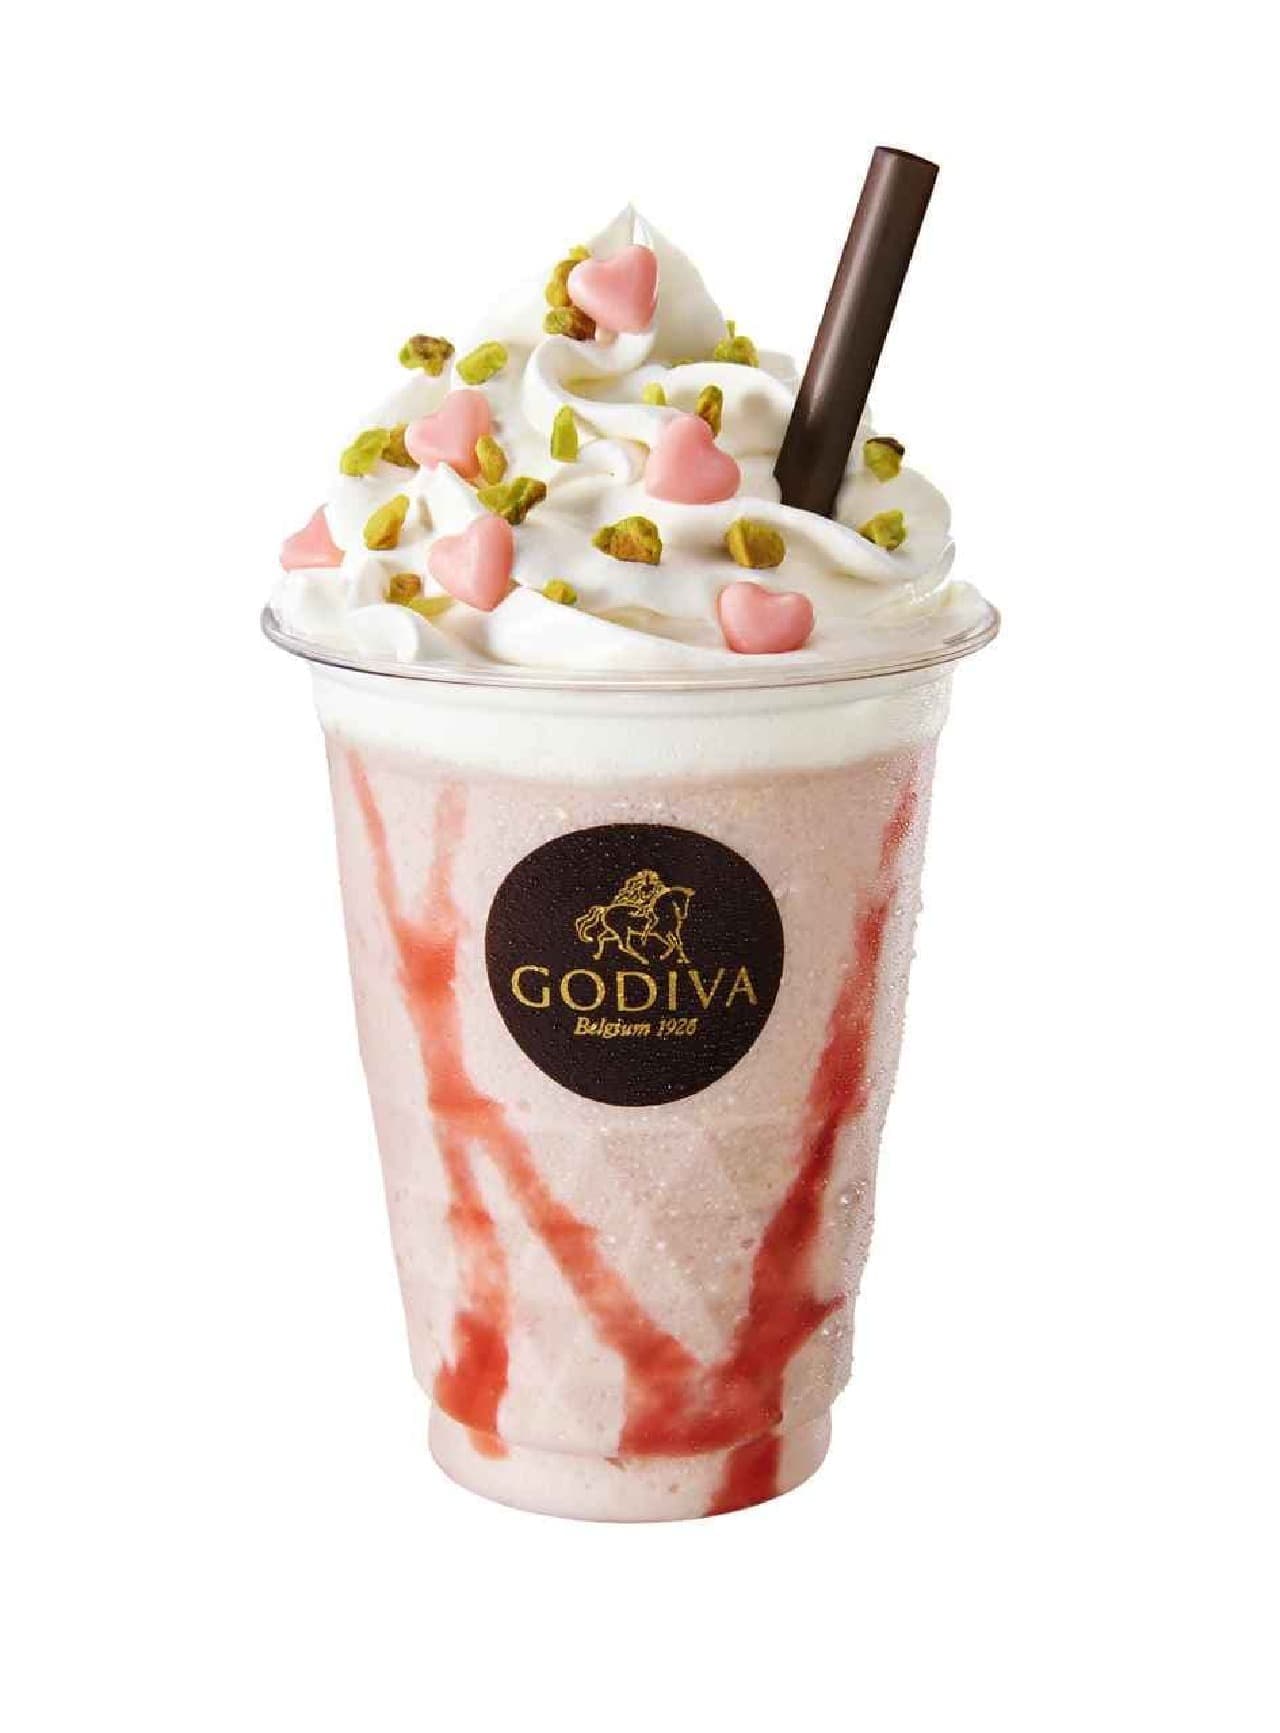 Godiva "Mixed Fruit Chocolate Liquidizer